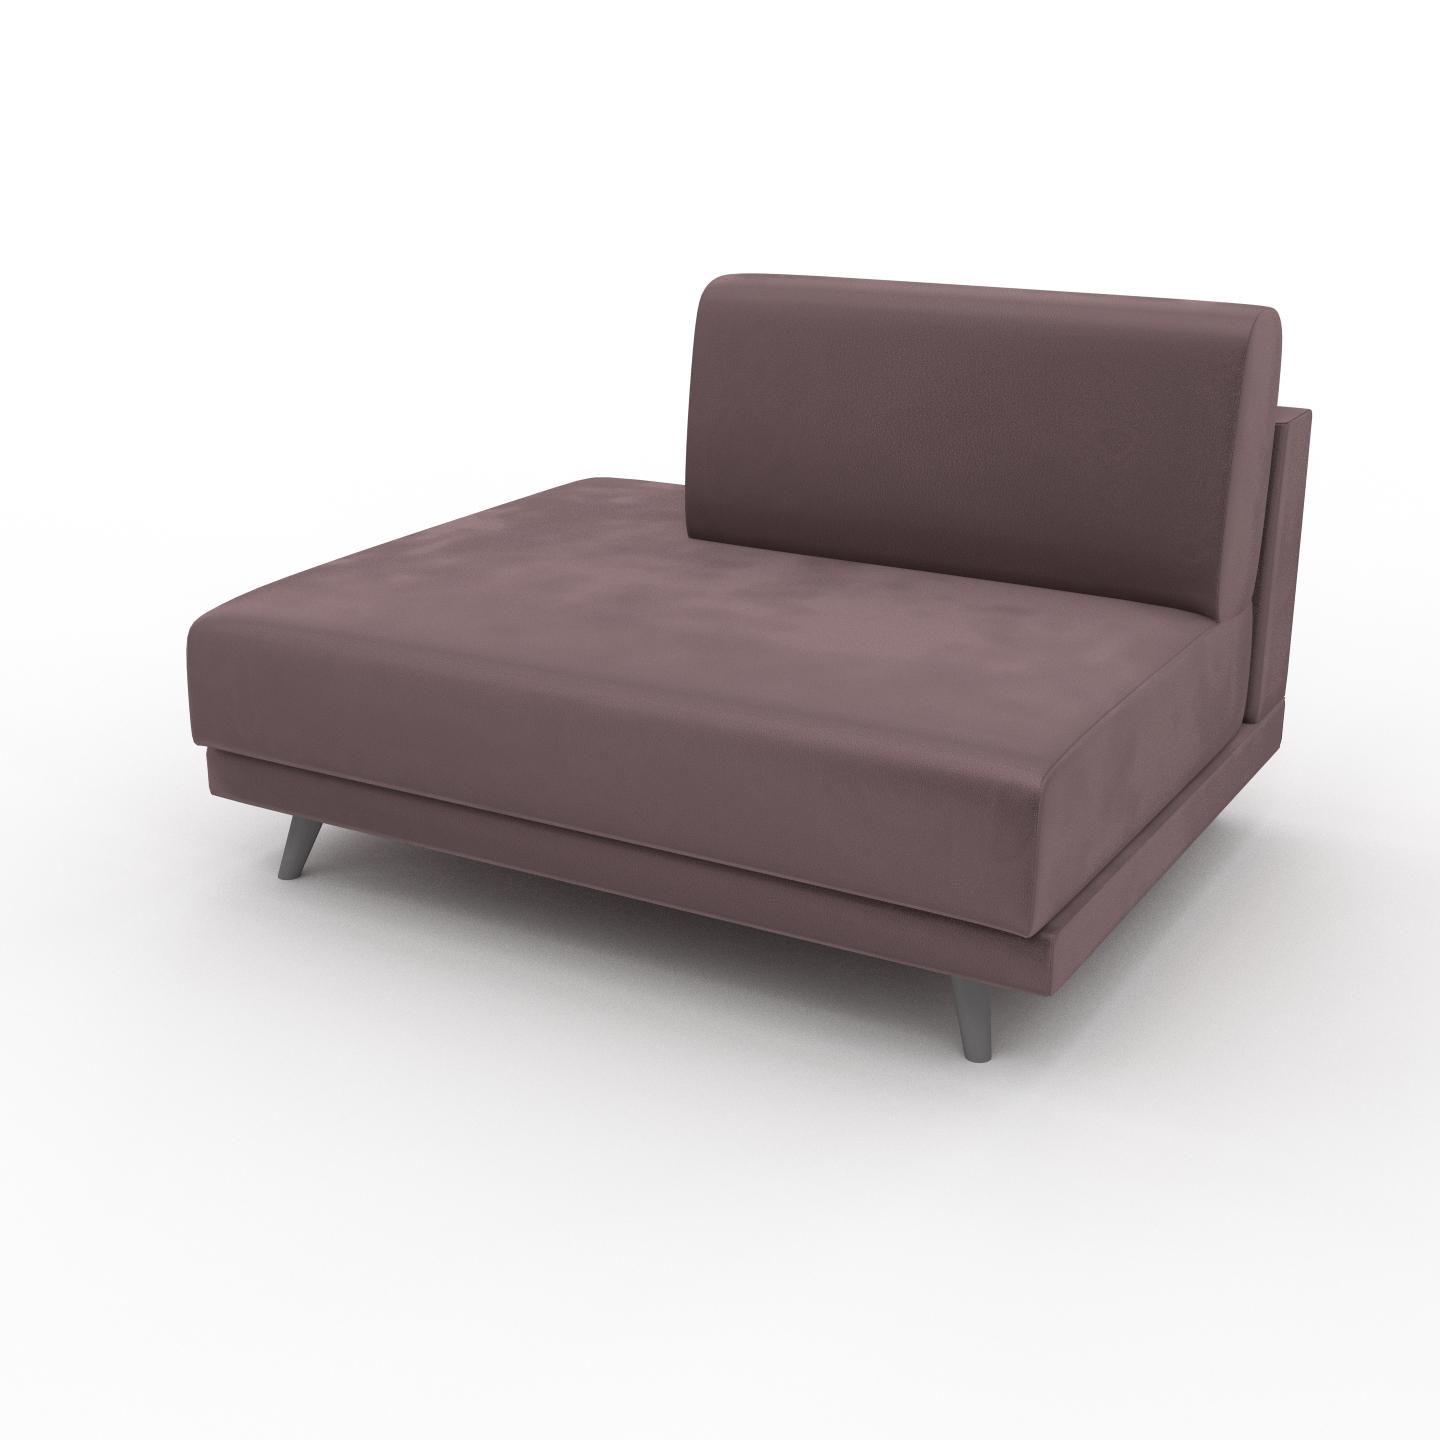 MYCS Sessel Samt Puderrosa - Eleganter Sessel: Hochwertige Qualität, einzigartiges Design - 120 x 75 x 98 cm, Individuell konfigurierbar